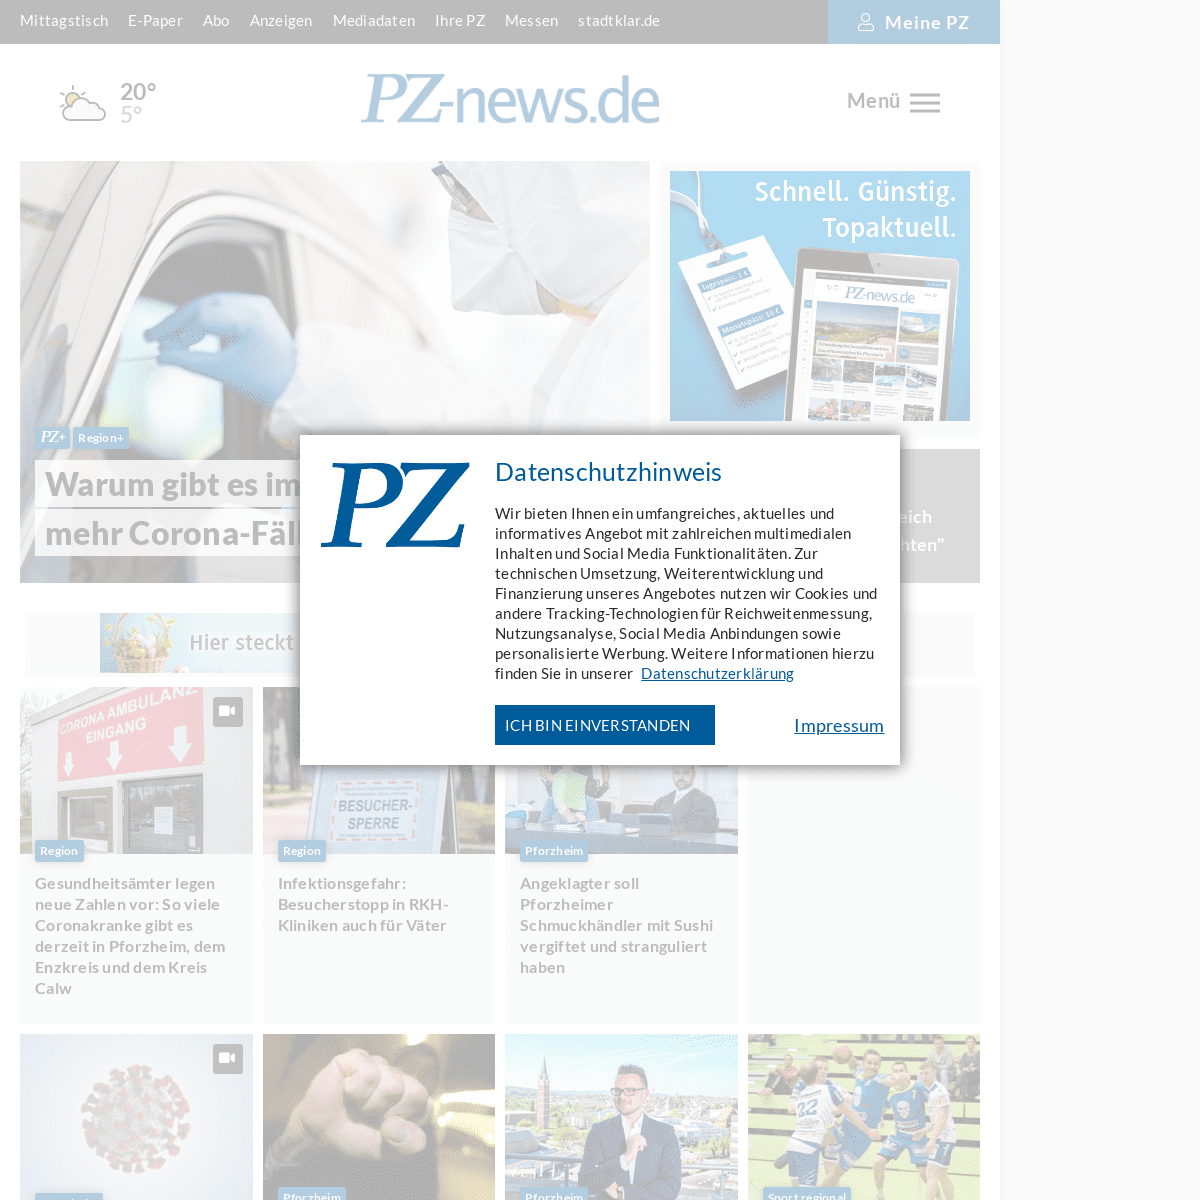 A complete backup of pz-news.de